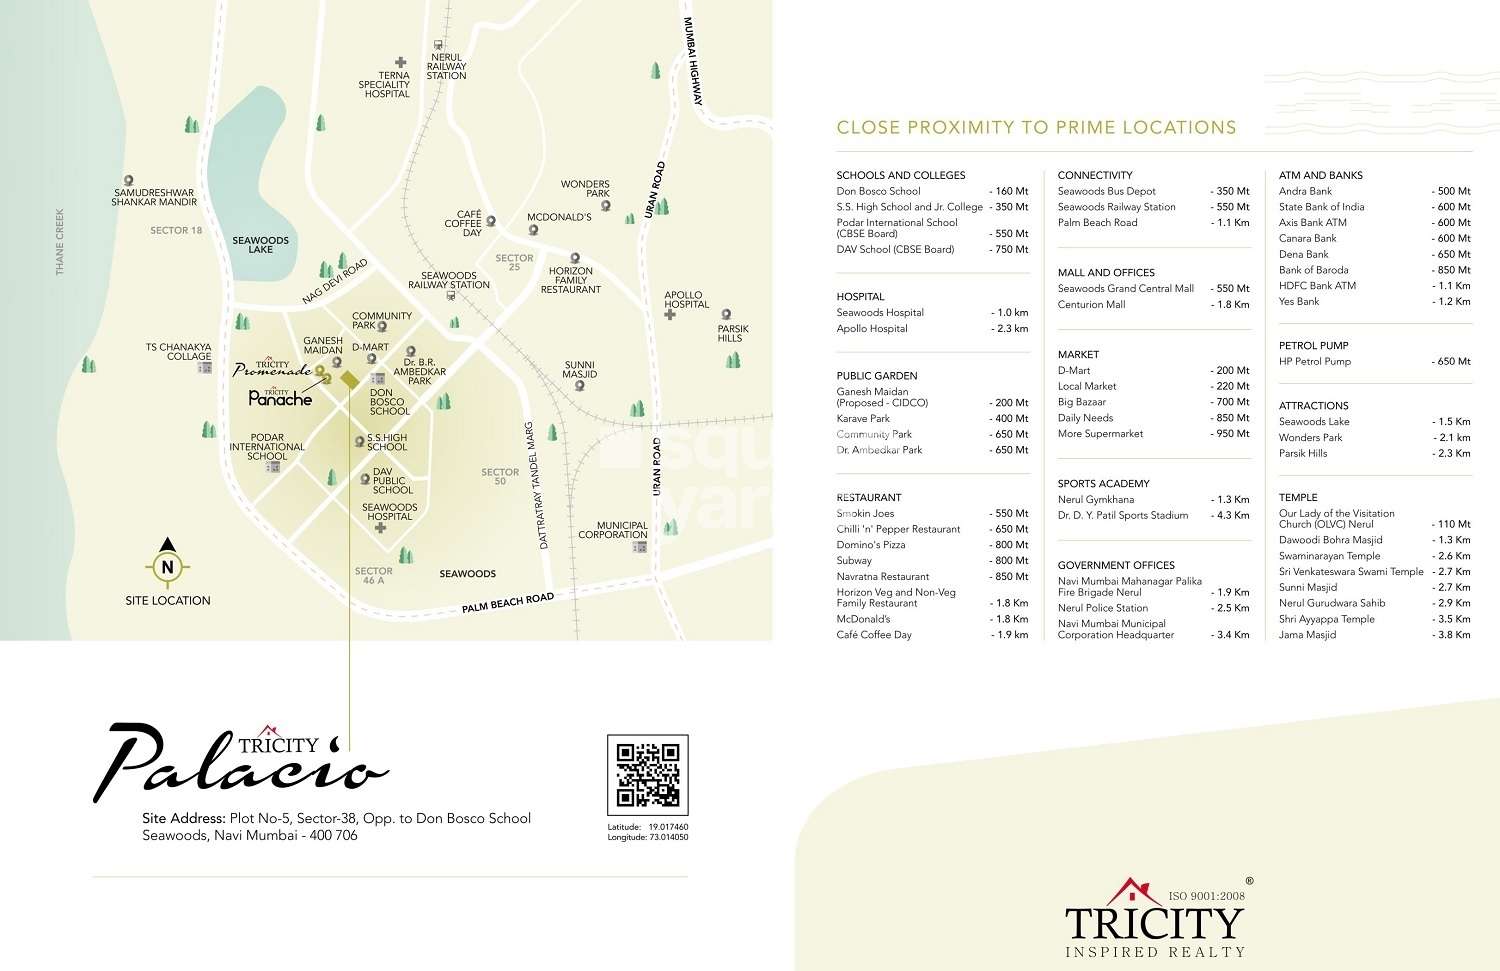 tricity palacio project location image1